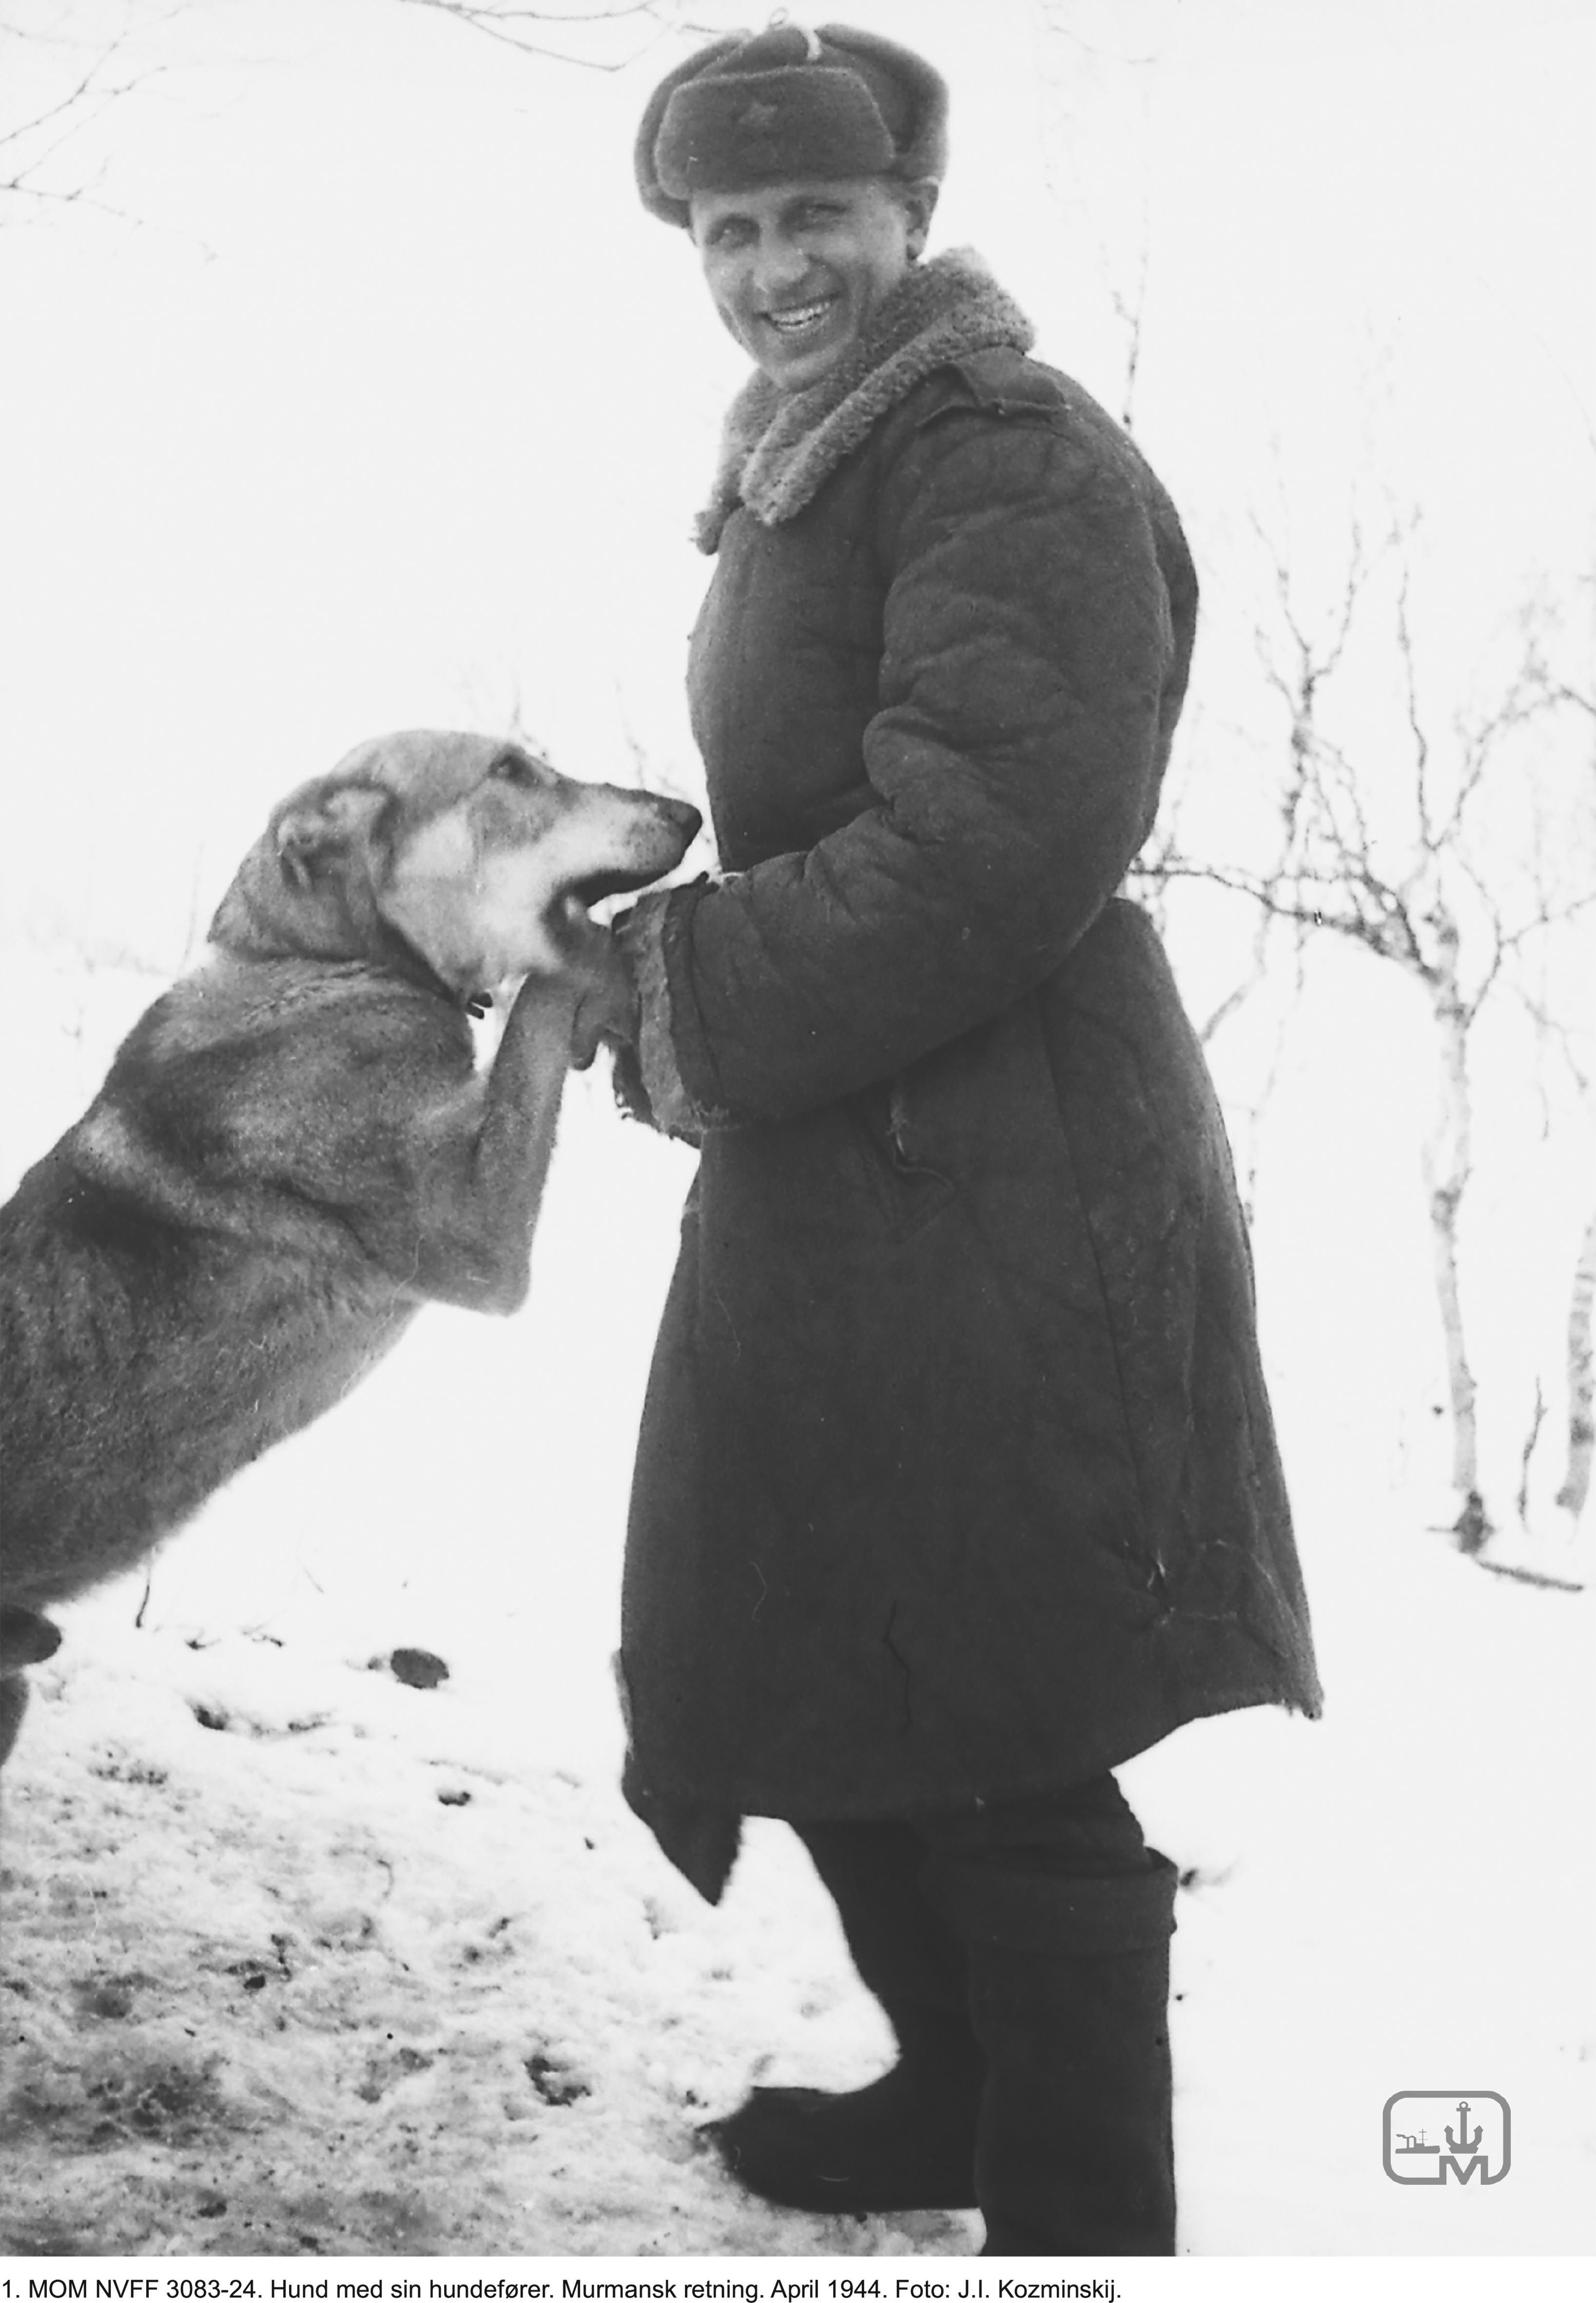 Pressebilde1-МОМ-NVFF-3083-24.-Hund-med-sin-hundefører.-Murmansk-retning.-April-1944.-Foto-J.I.-Kozminskij-1.jpg